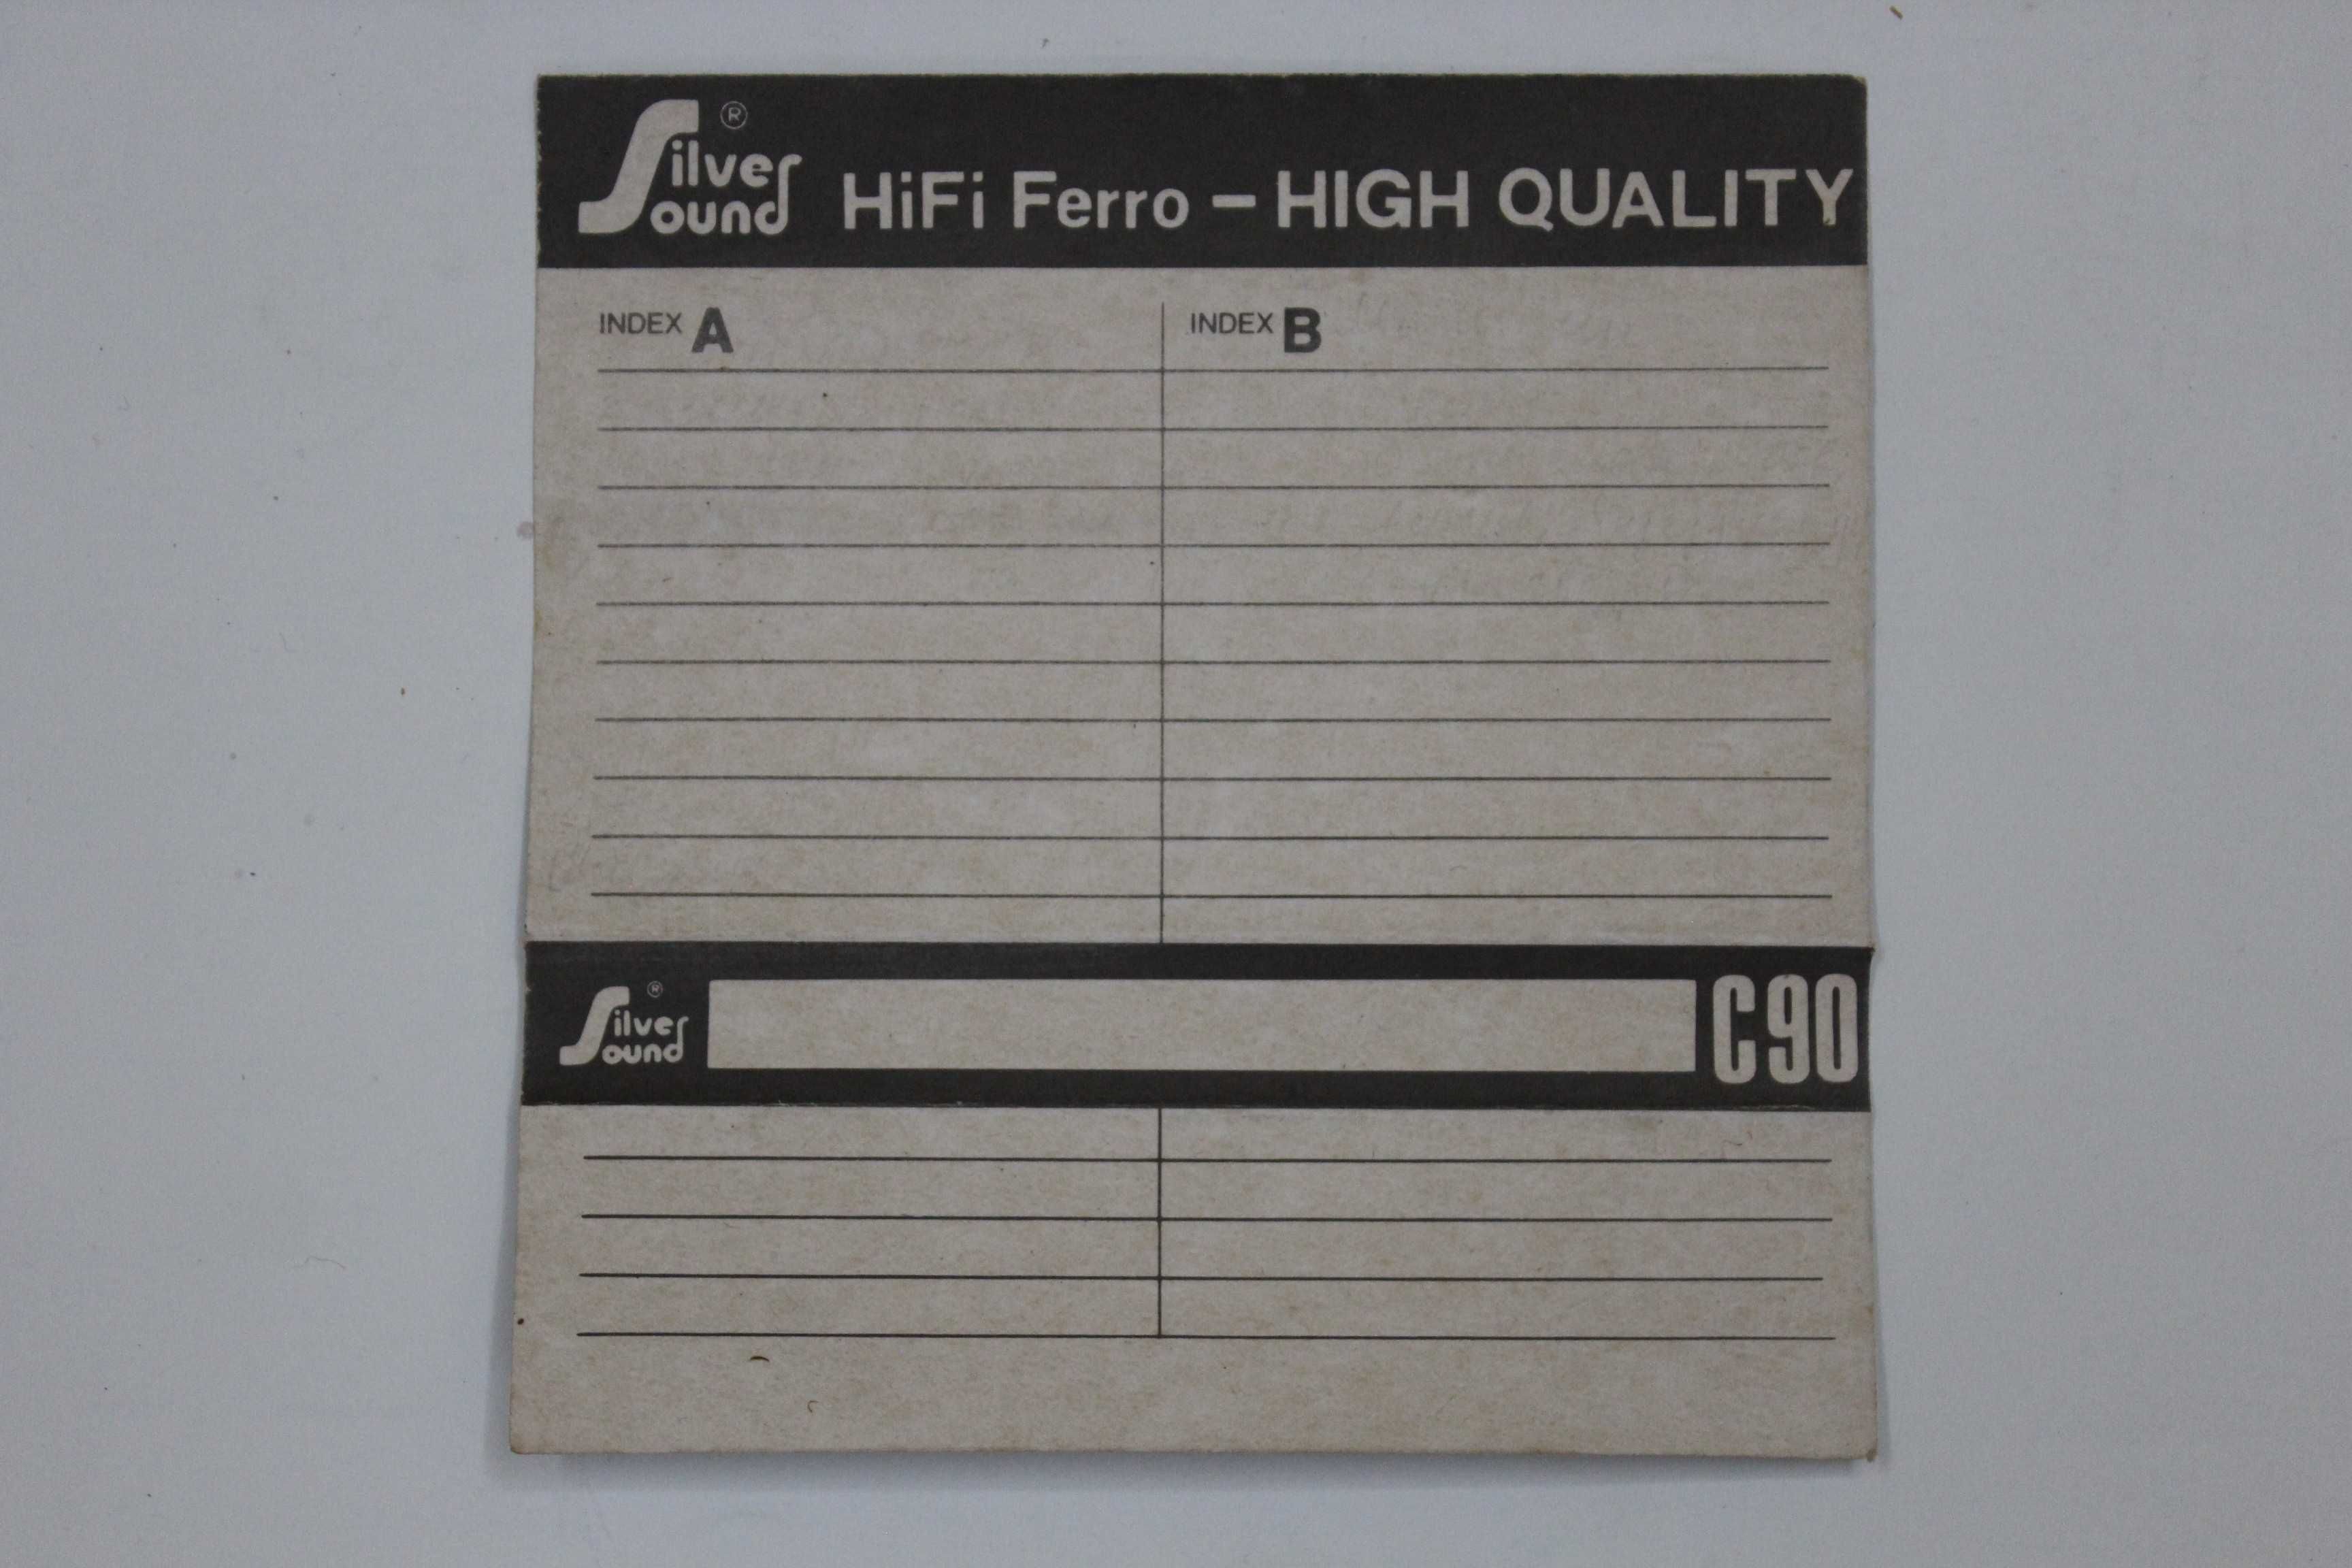 Аудиокассета кассета SILVER SOUND C-90 Hi-Fi Ferro / compact cassette